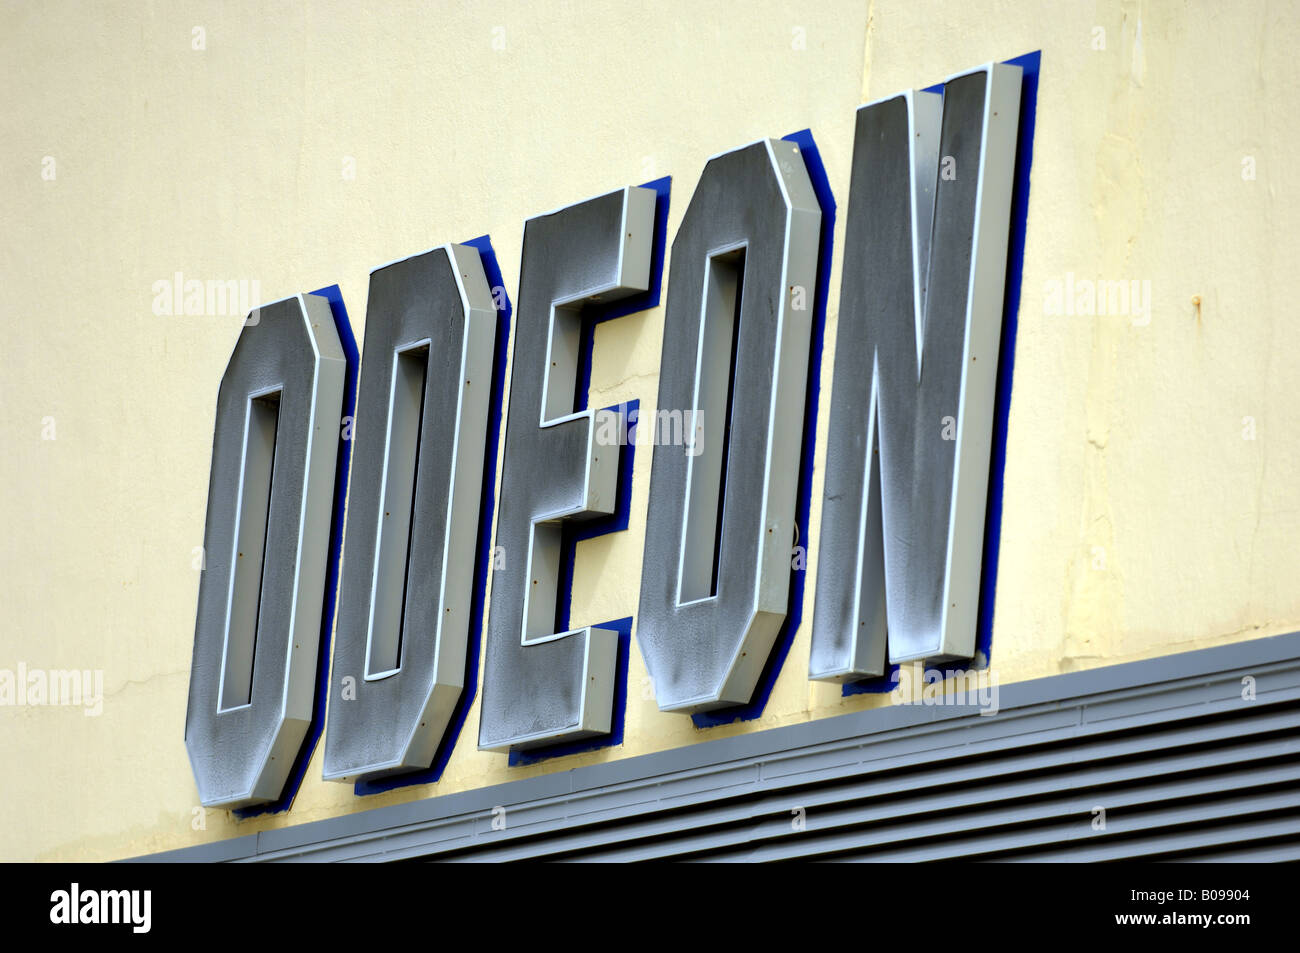 Odeon cinema sign in Brighton UK Stock Photo